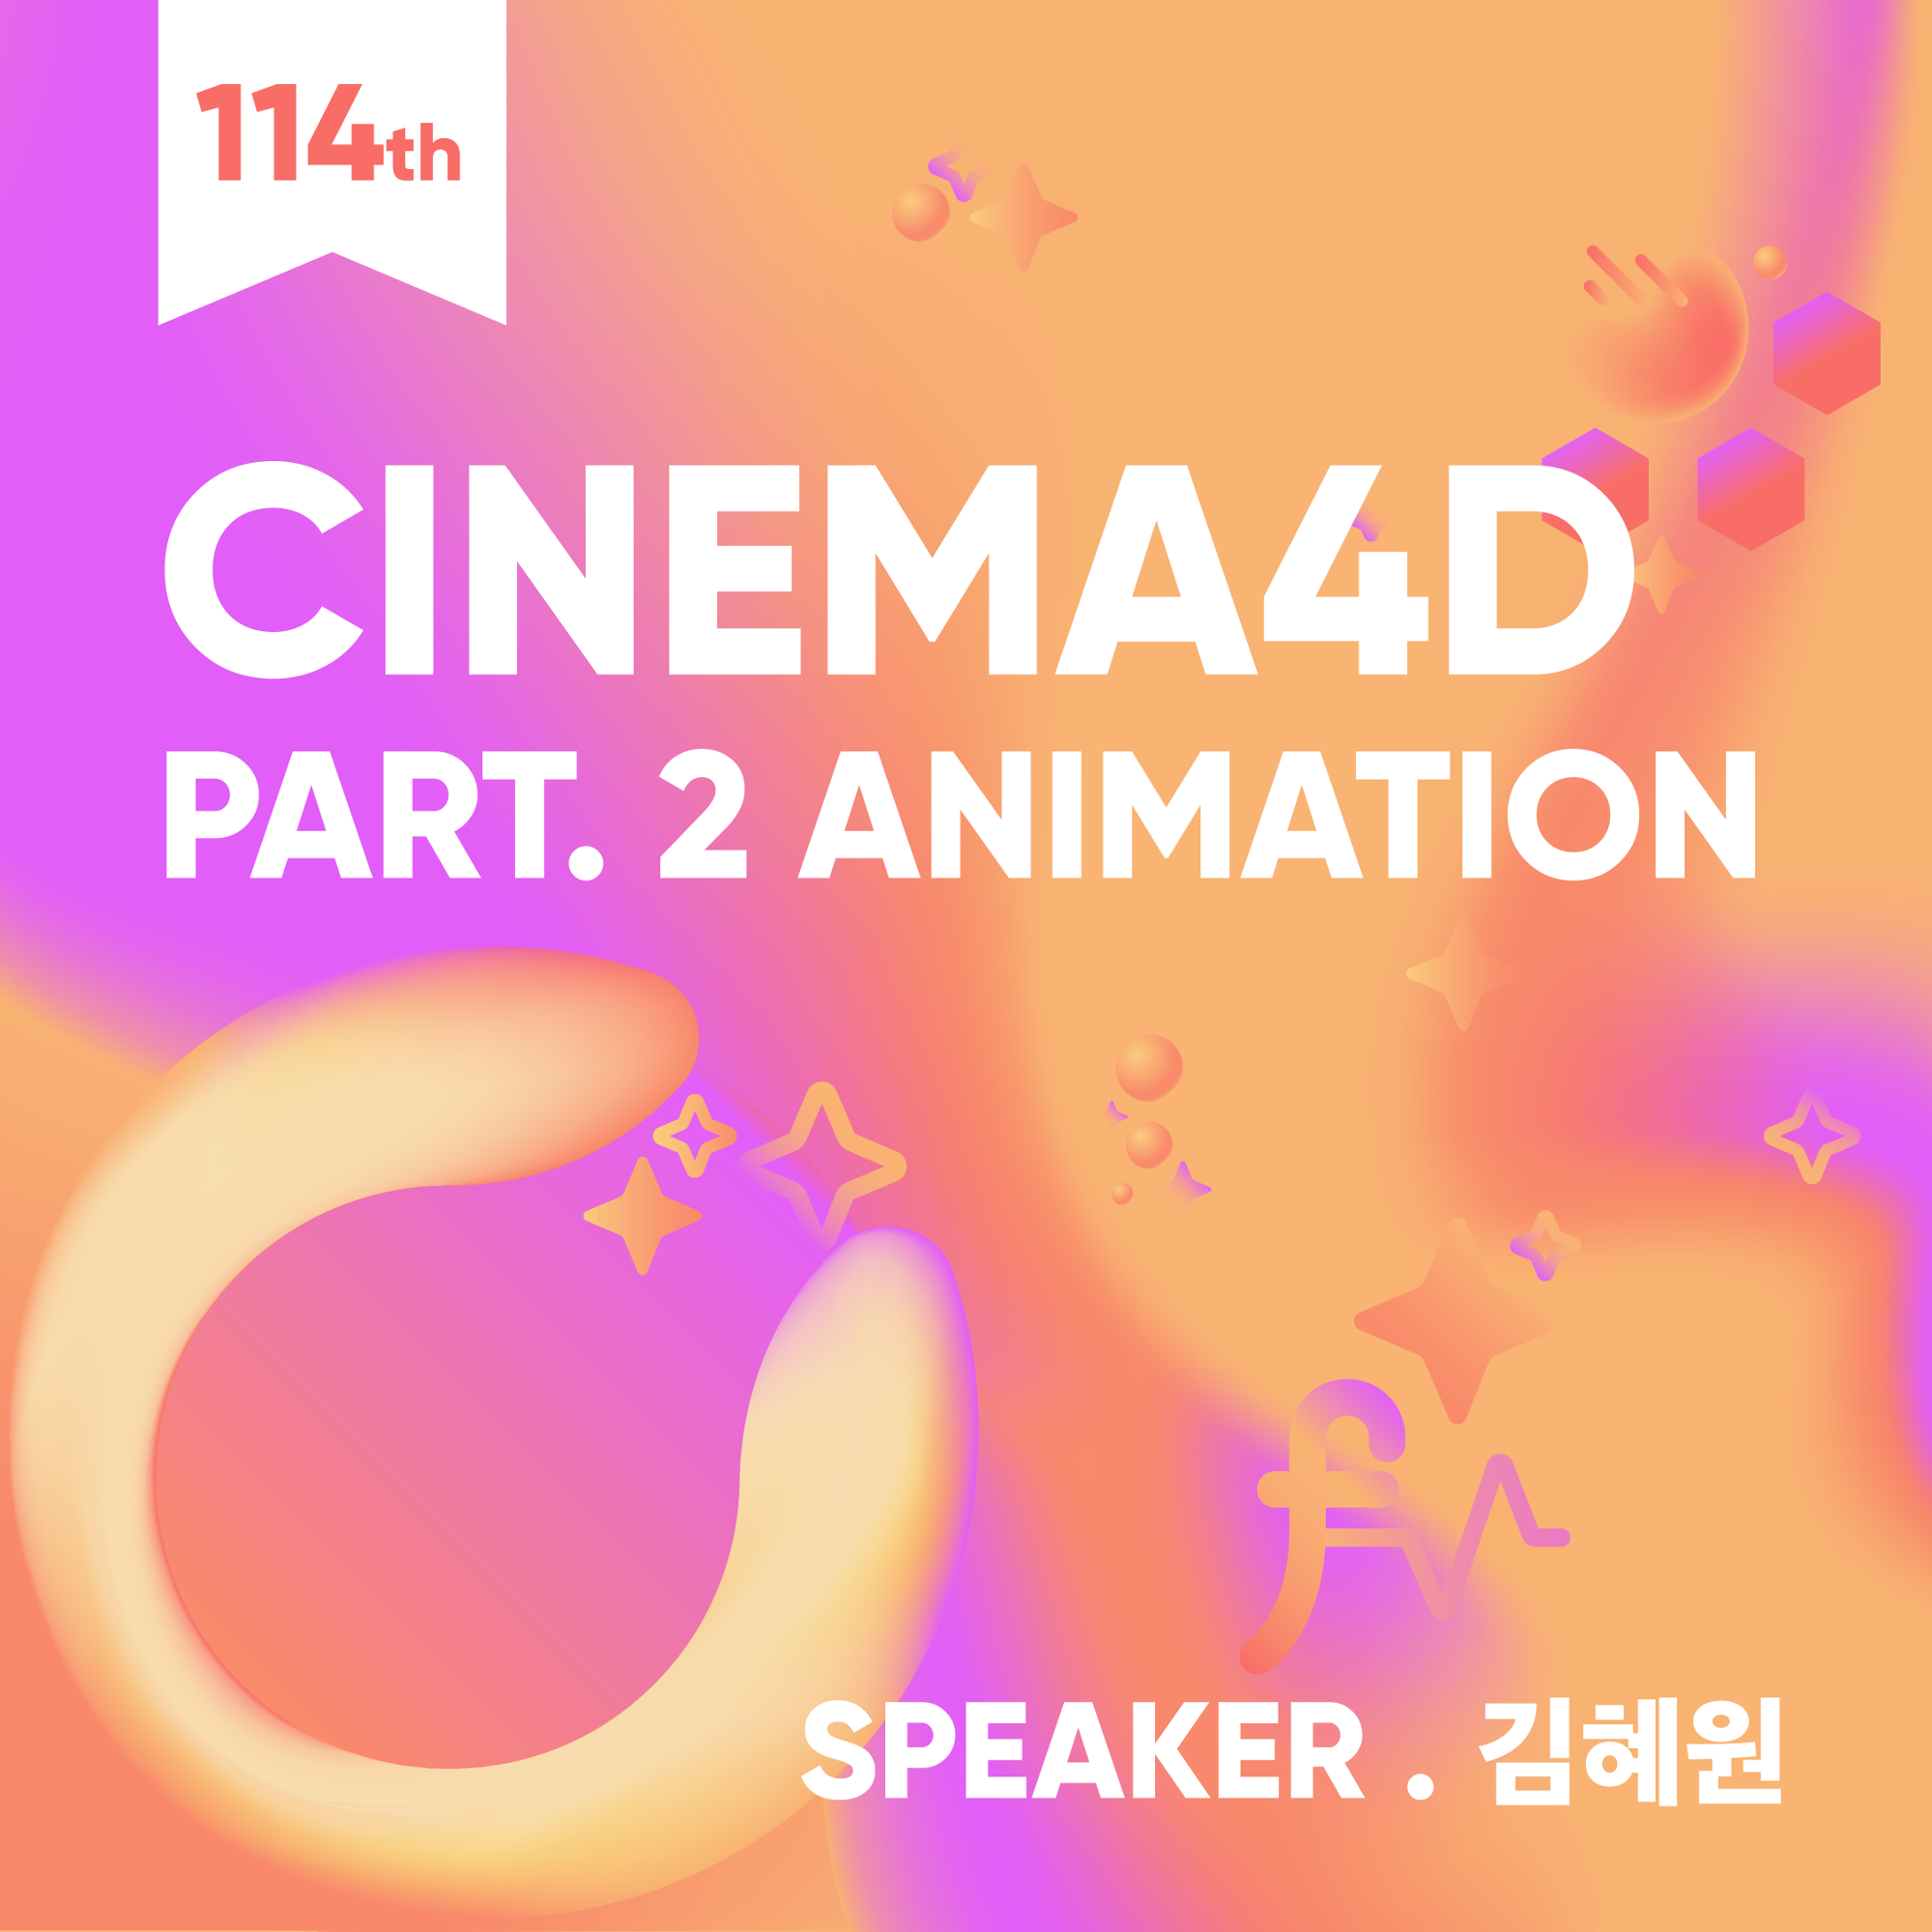 CINEMA4D 기초114기 Part.2 animation (화, 목 반)